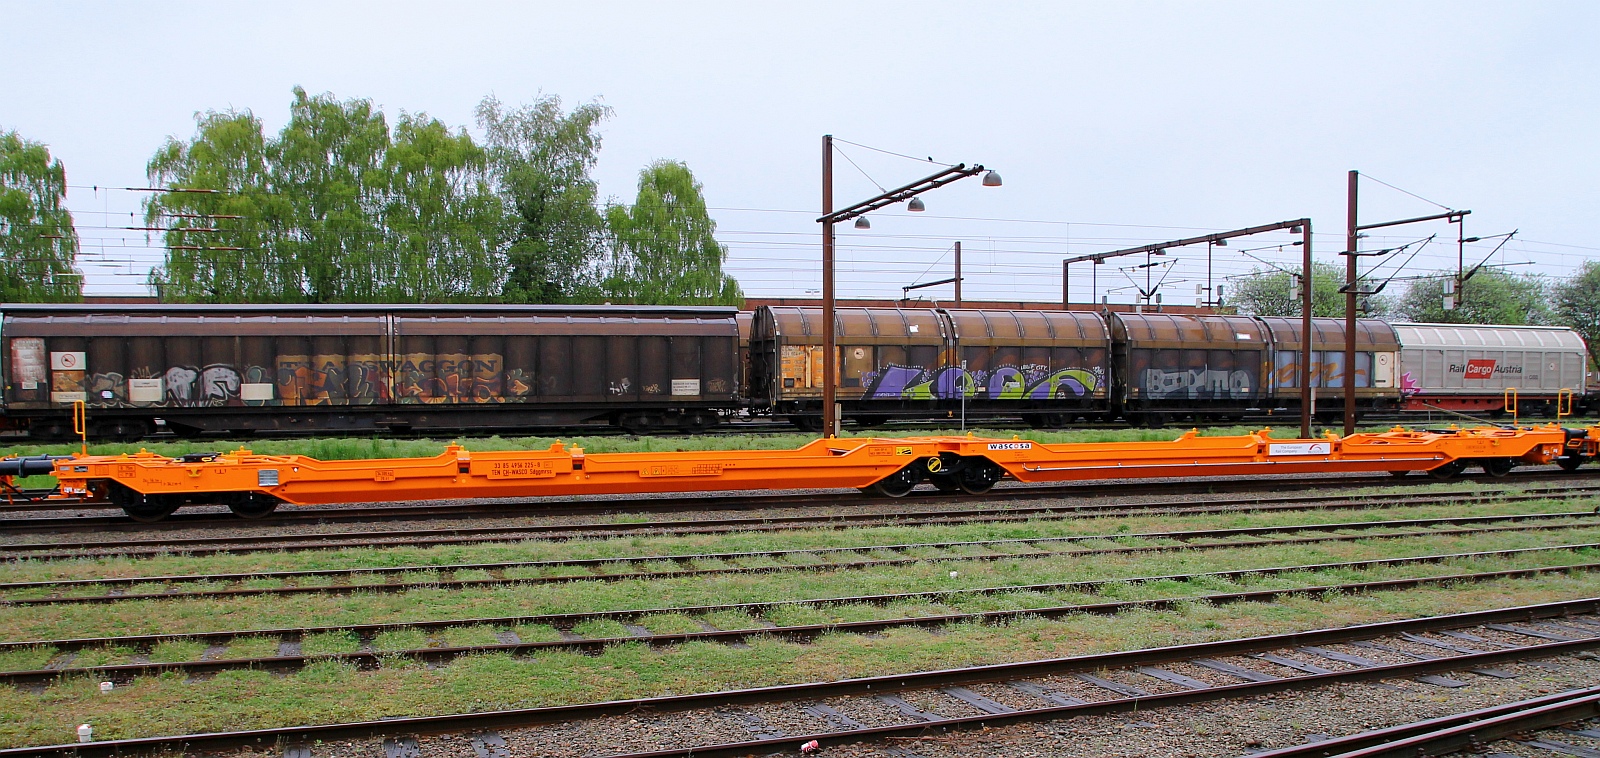 CH-WASCO 33 85 4956 225-8 Gattung Sdggmrss, REV/TVP/15.04.14, sechsachsiger Container-Tragwagen, Pattburg 02.05.2014